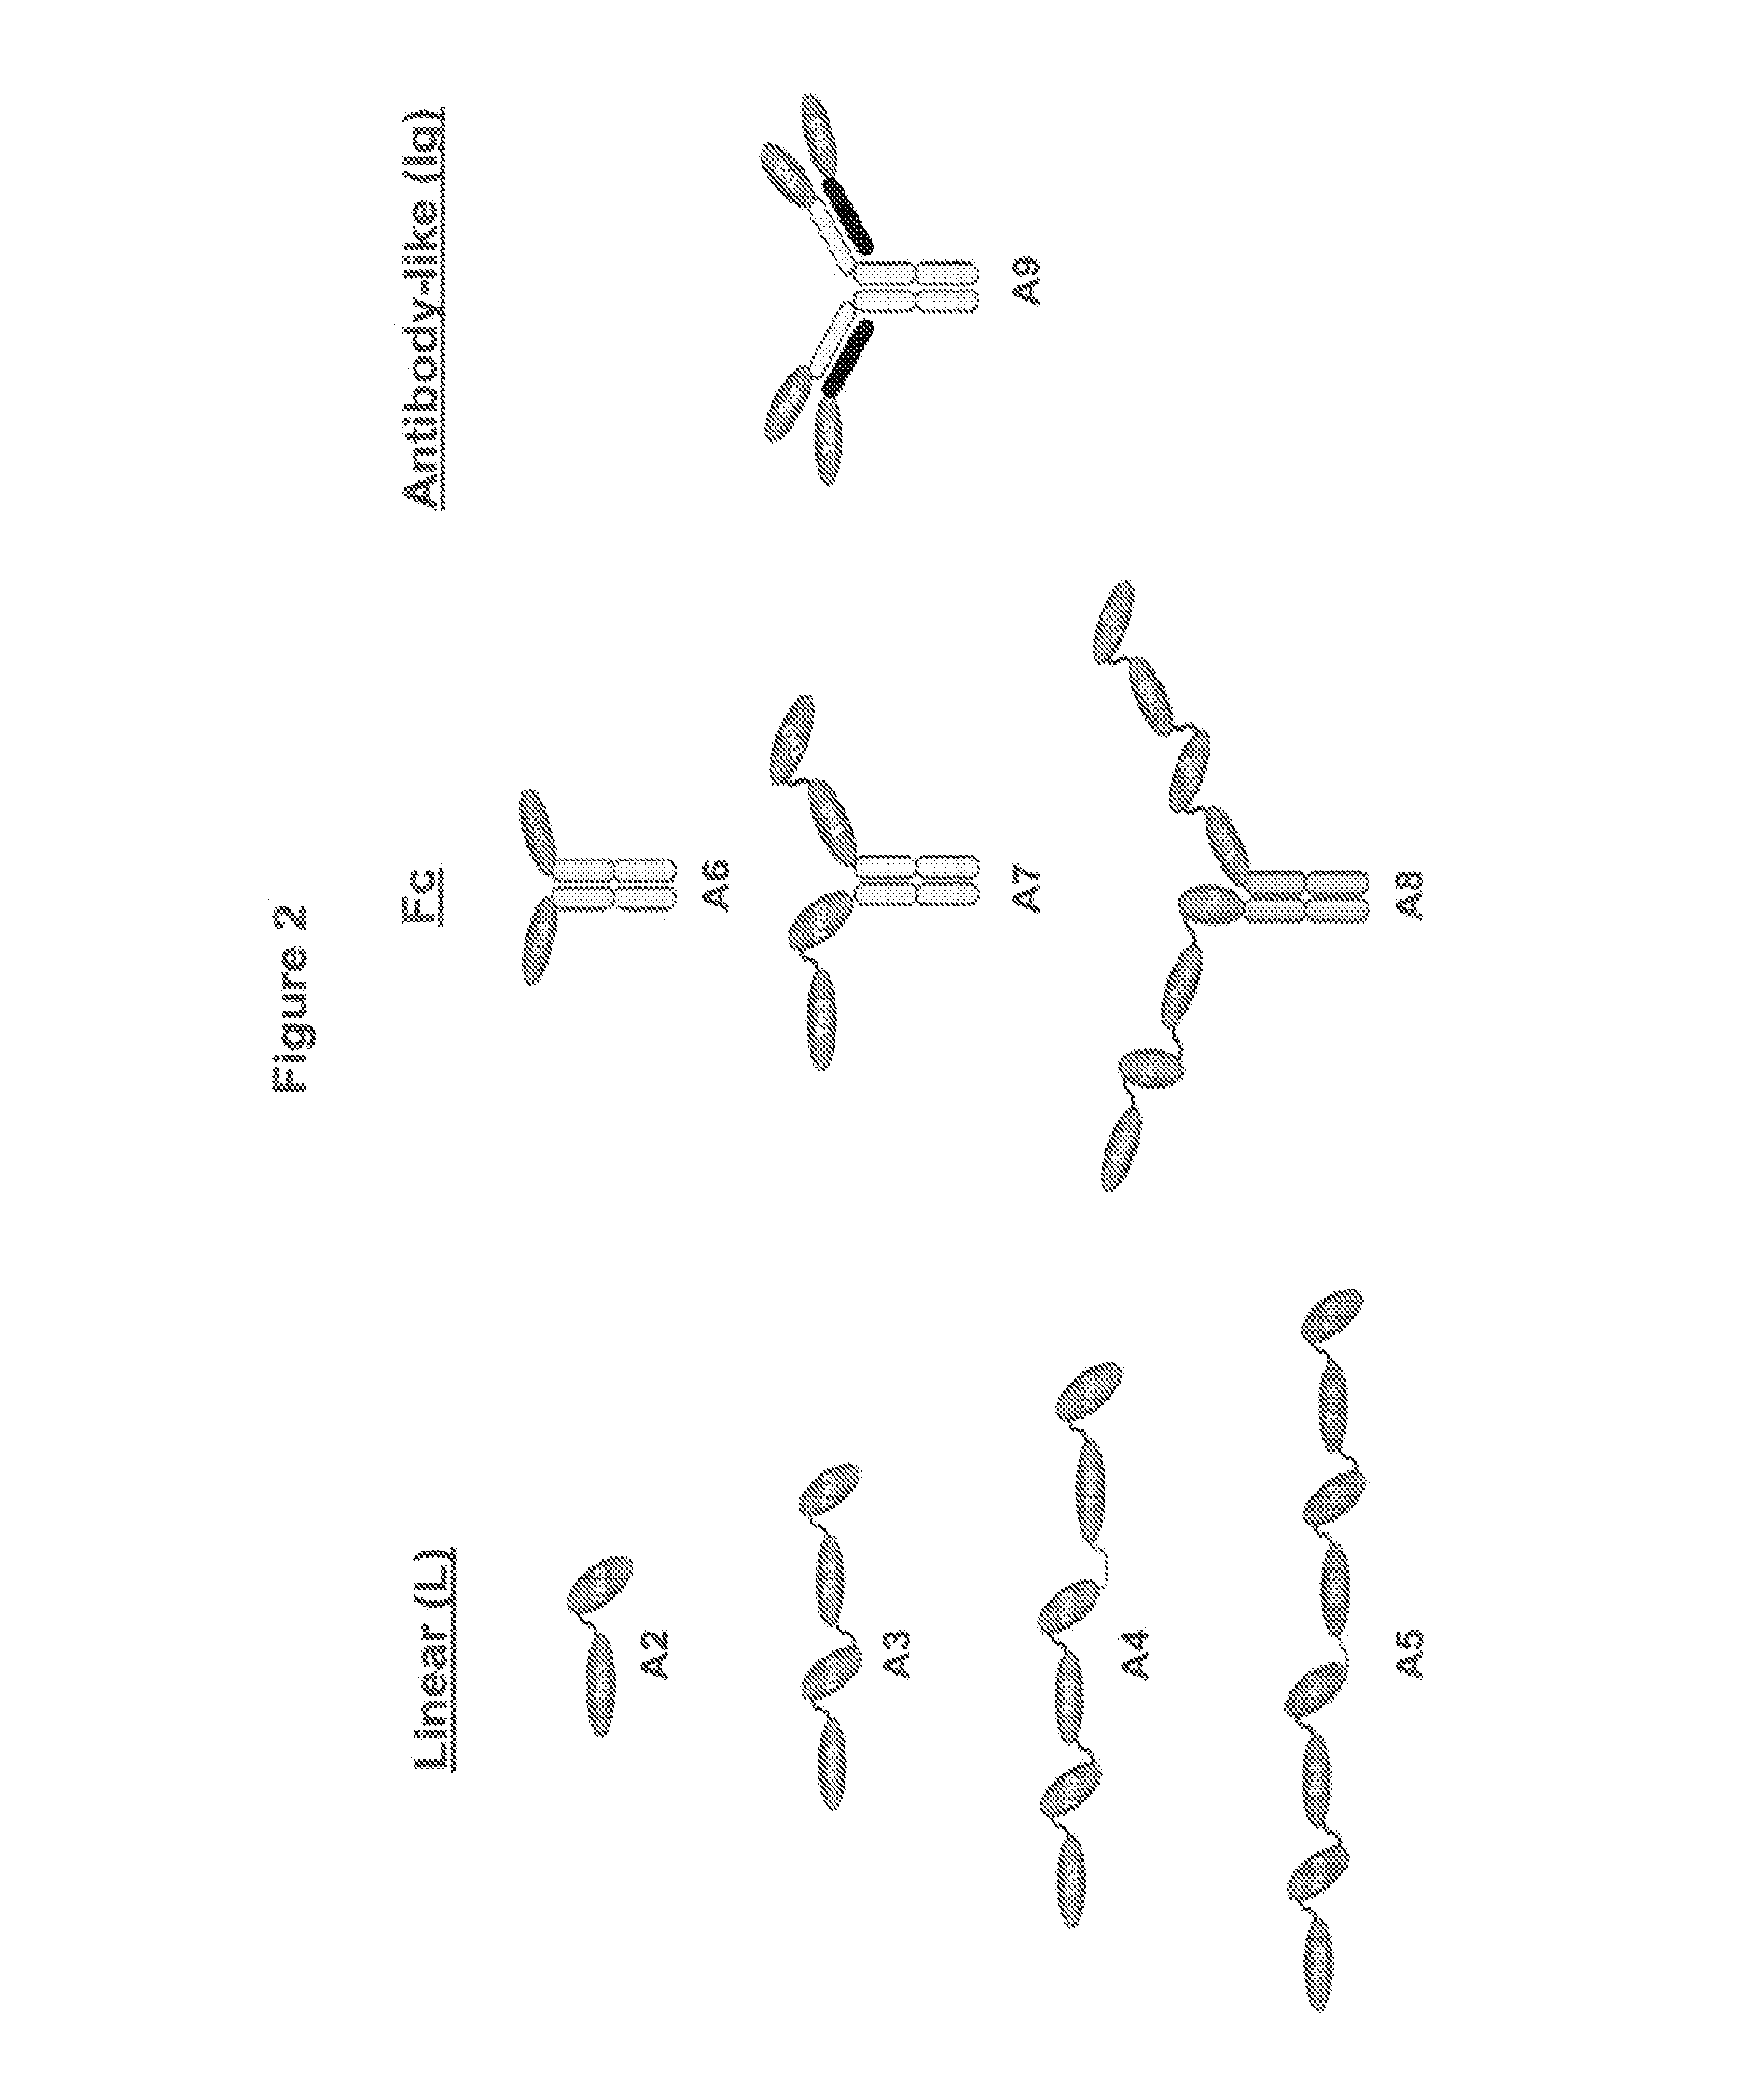 Fibronectin type iii domain-based multimeric scaffolds